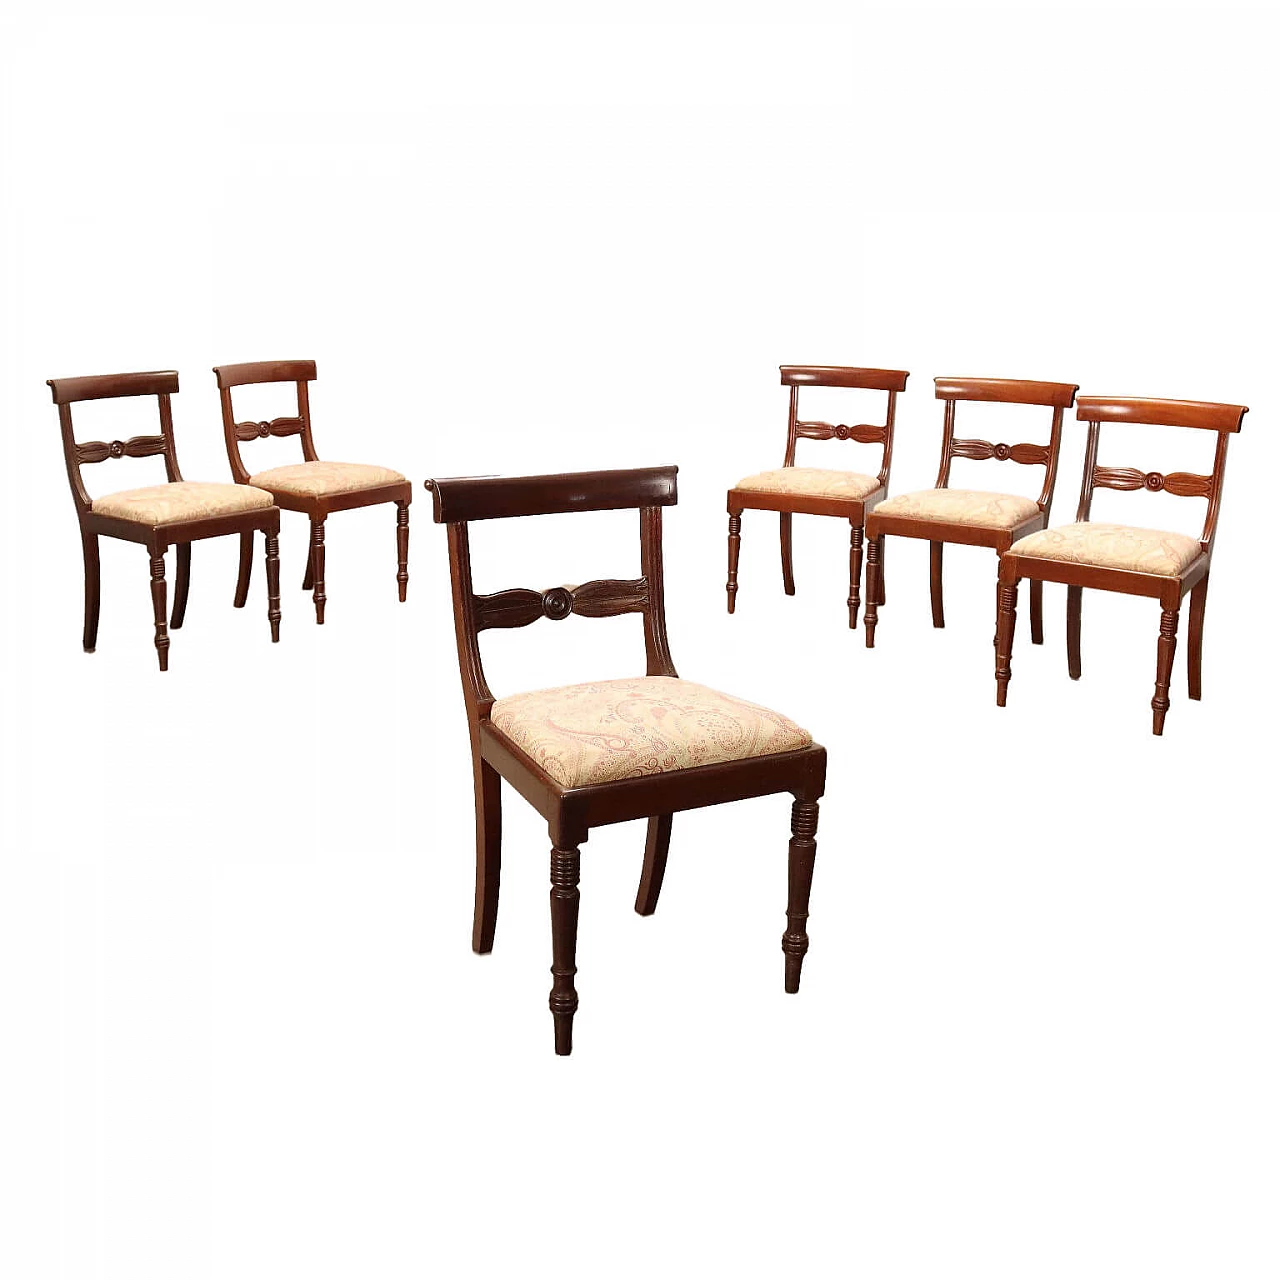 6 Victorian mahogany chairs, late 19th century 1